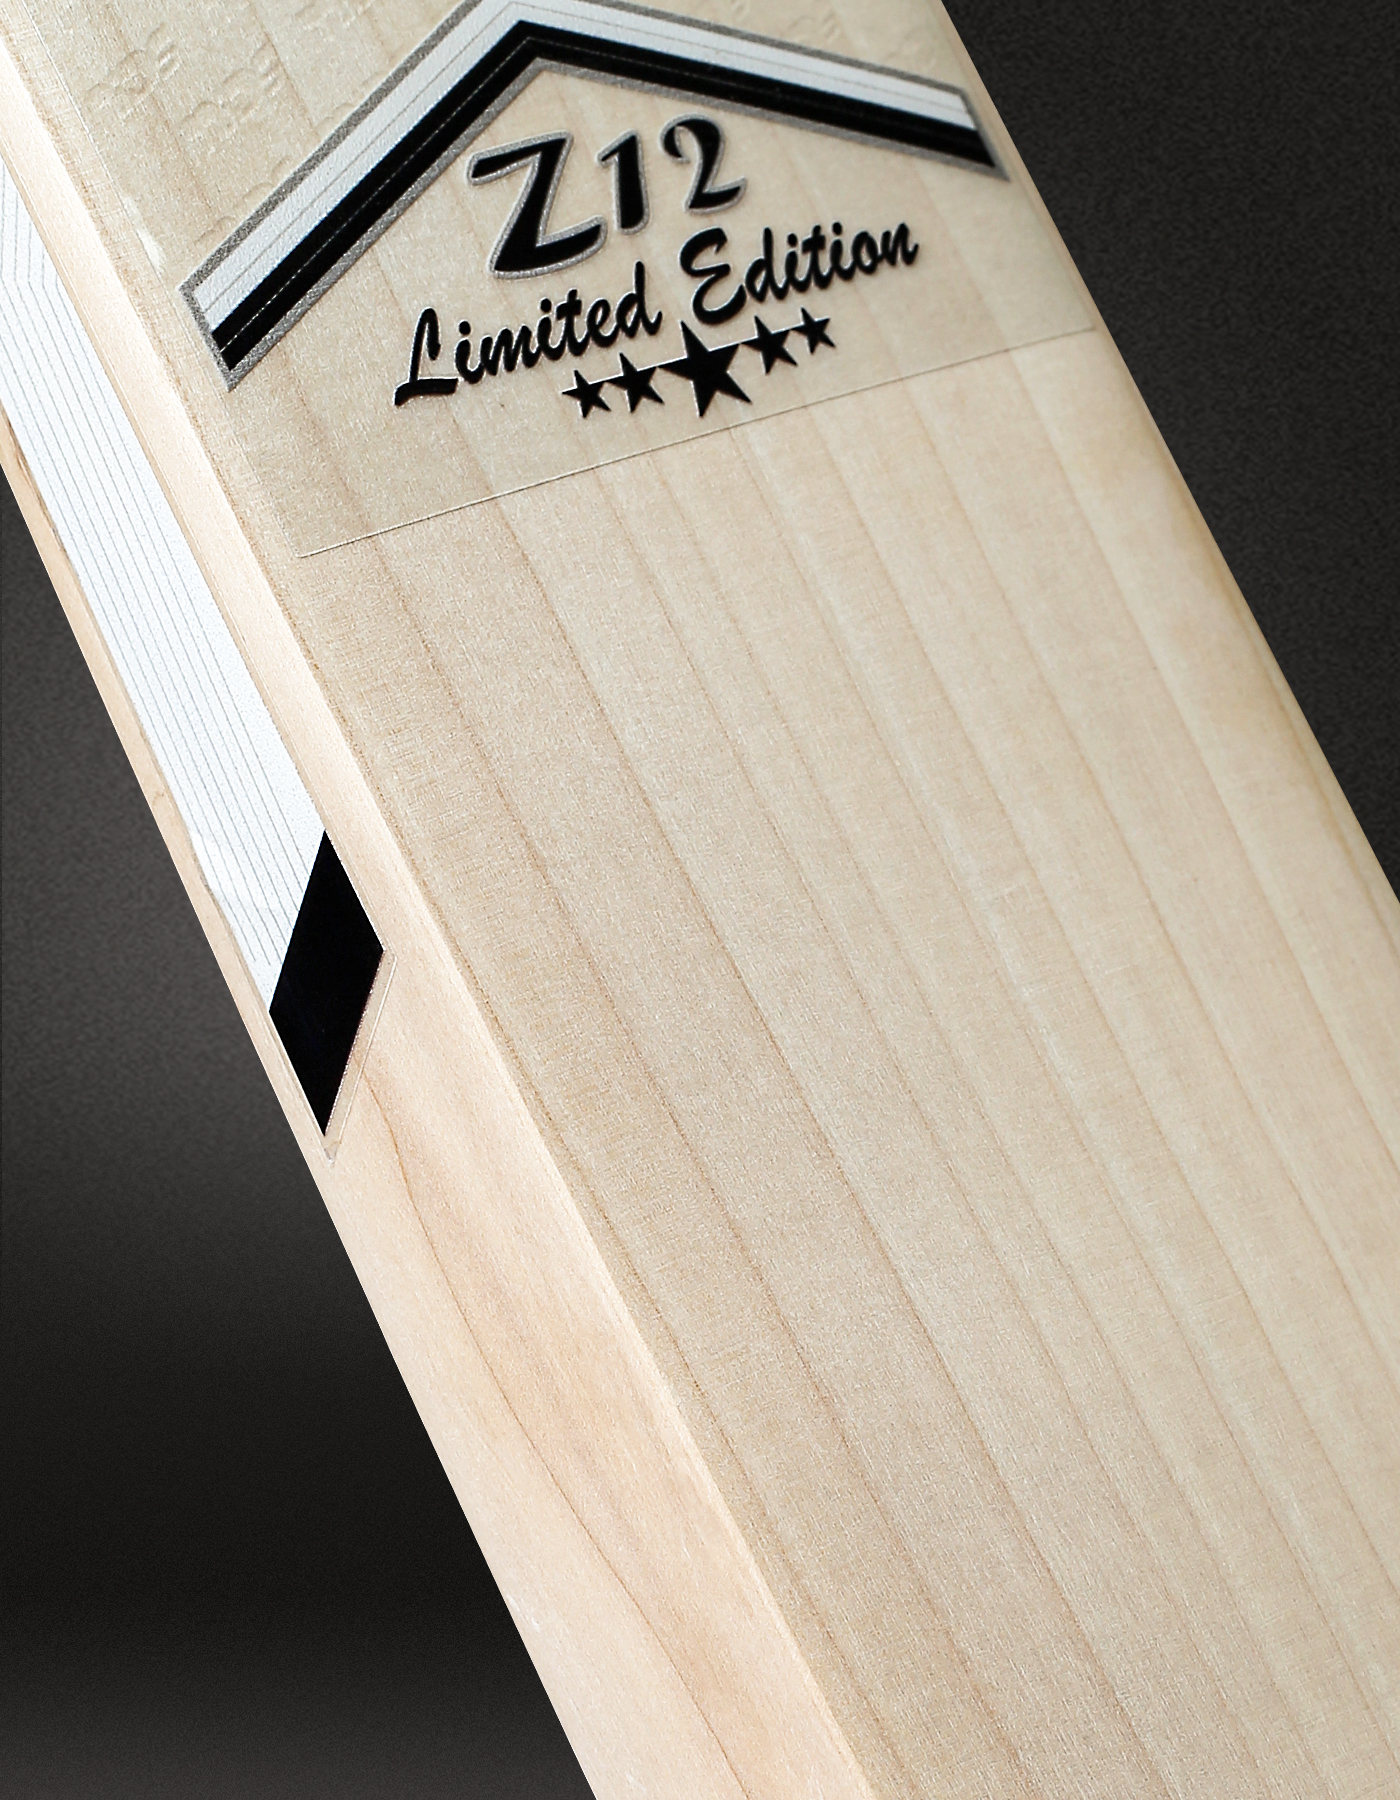 Z-12 Limited Edition Cricket Bat